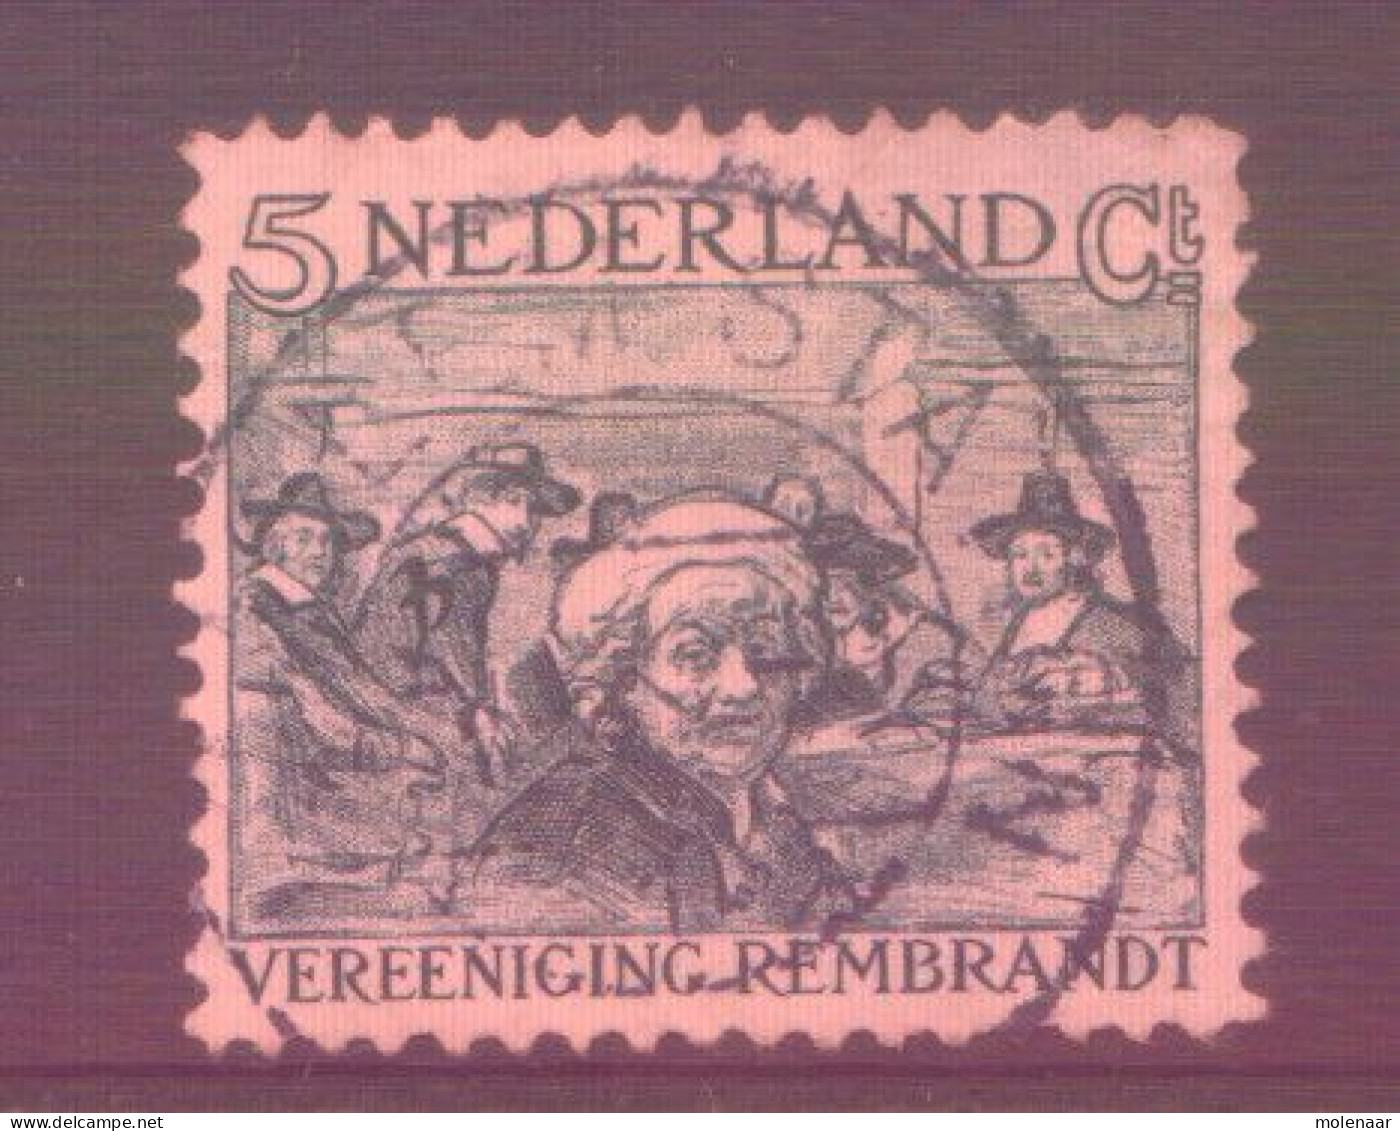 Postzegels > Europa > Nederland > Periode 1891-1948 (Wilhelmina) > 1891-1909 > 229 Gebruikt (11761) - Usados